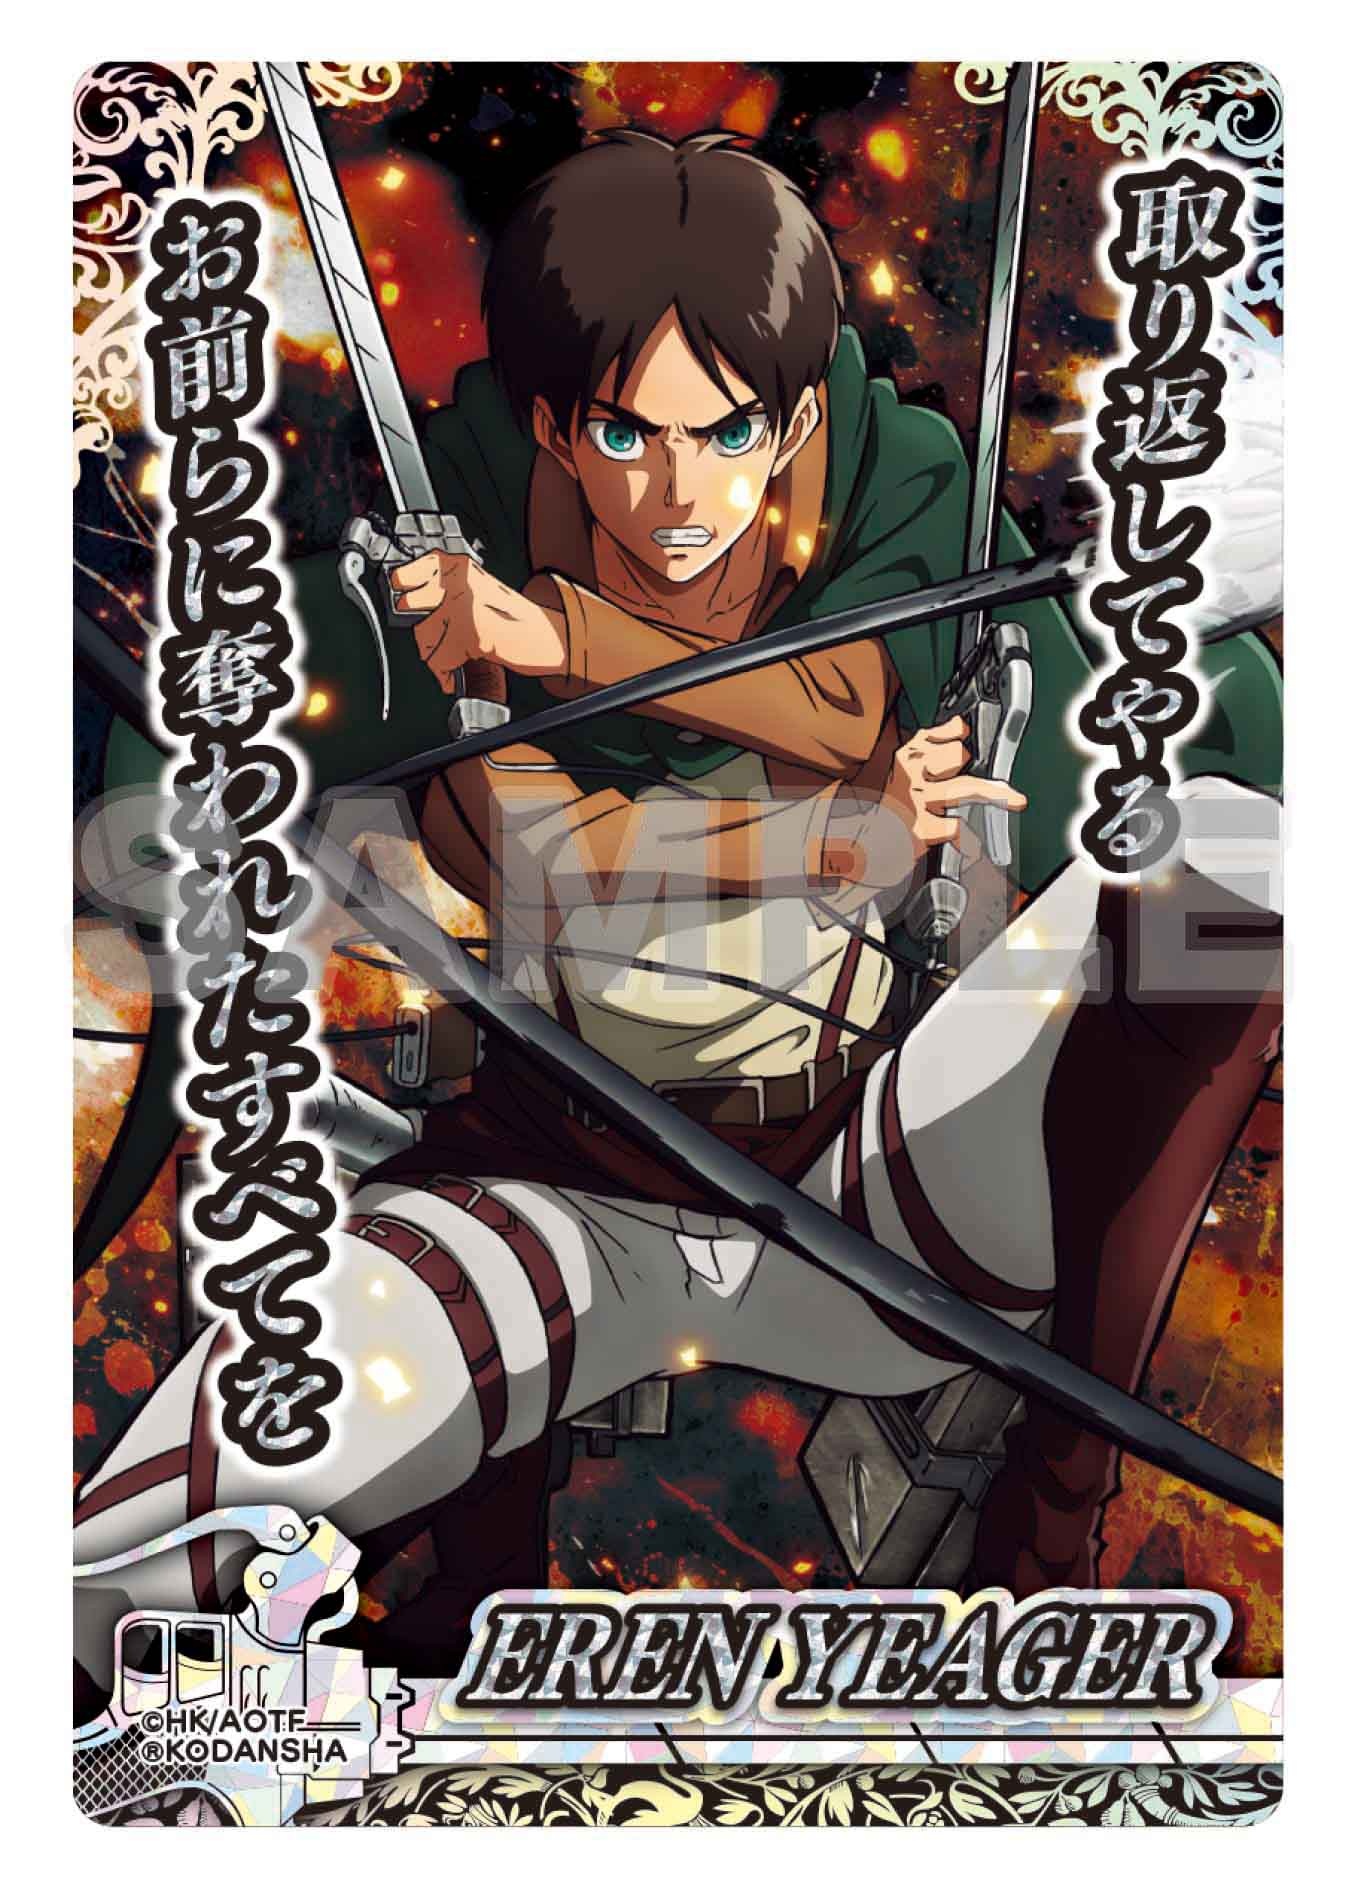 Attack on Titan Collection Cards, Sp, Sr. Japonês, Anime, TCg